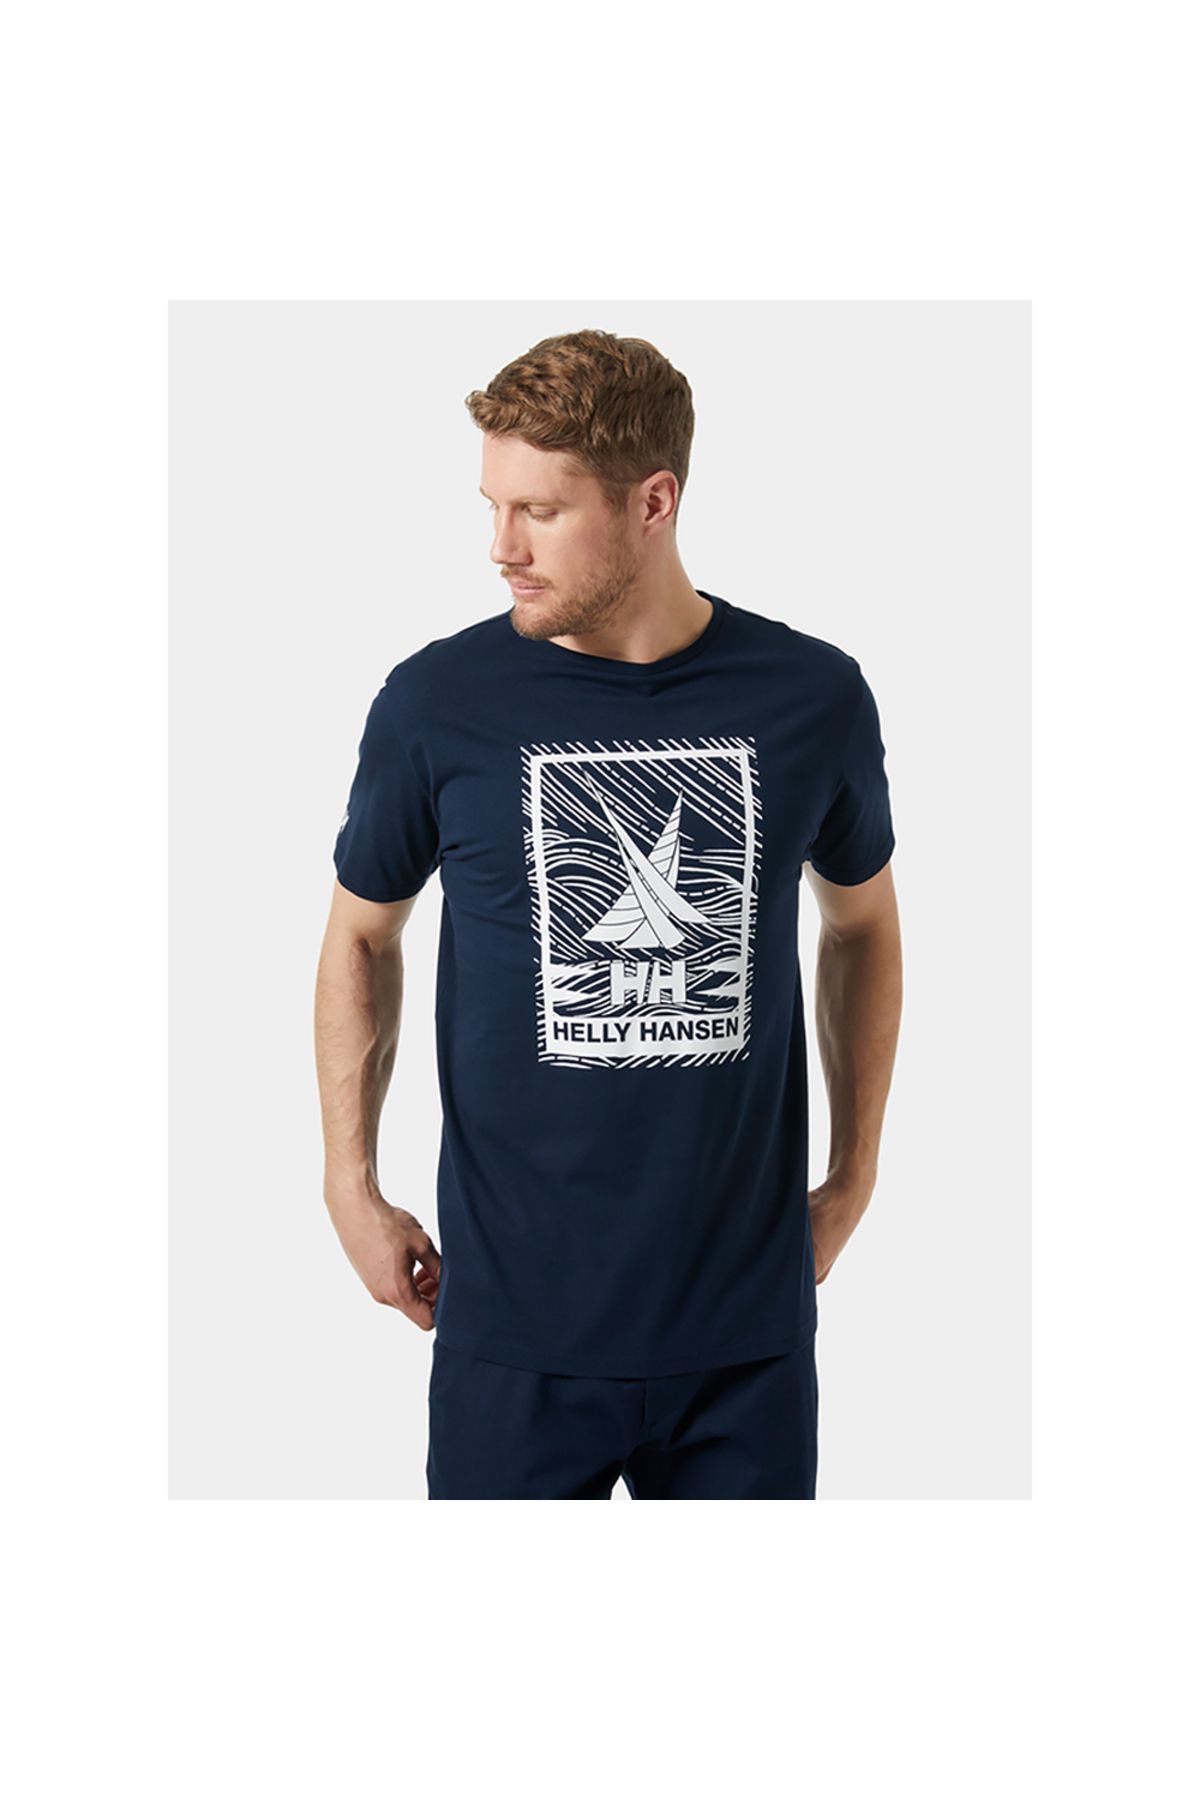 Helly Hansen Shoreline 2.0 Erkek Kısa Kollu T-Shirt